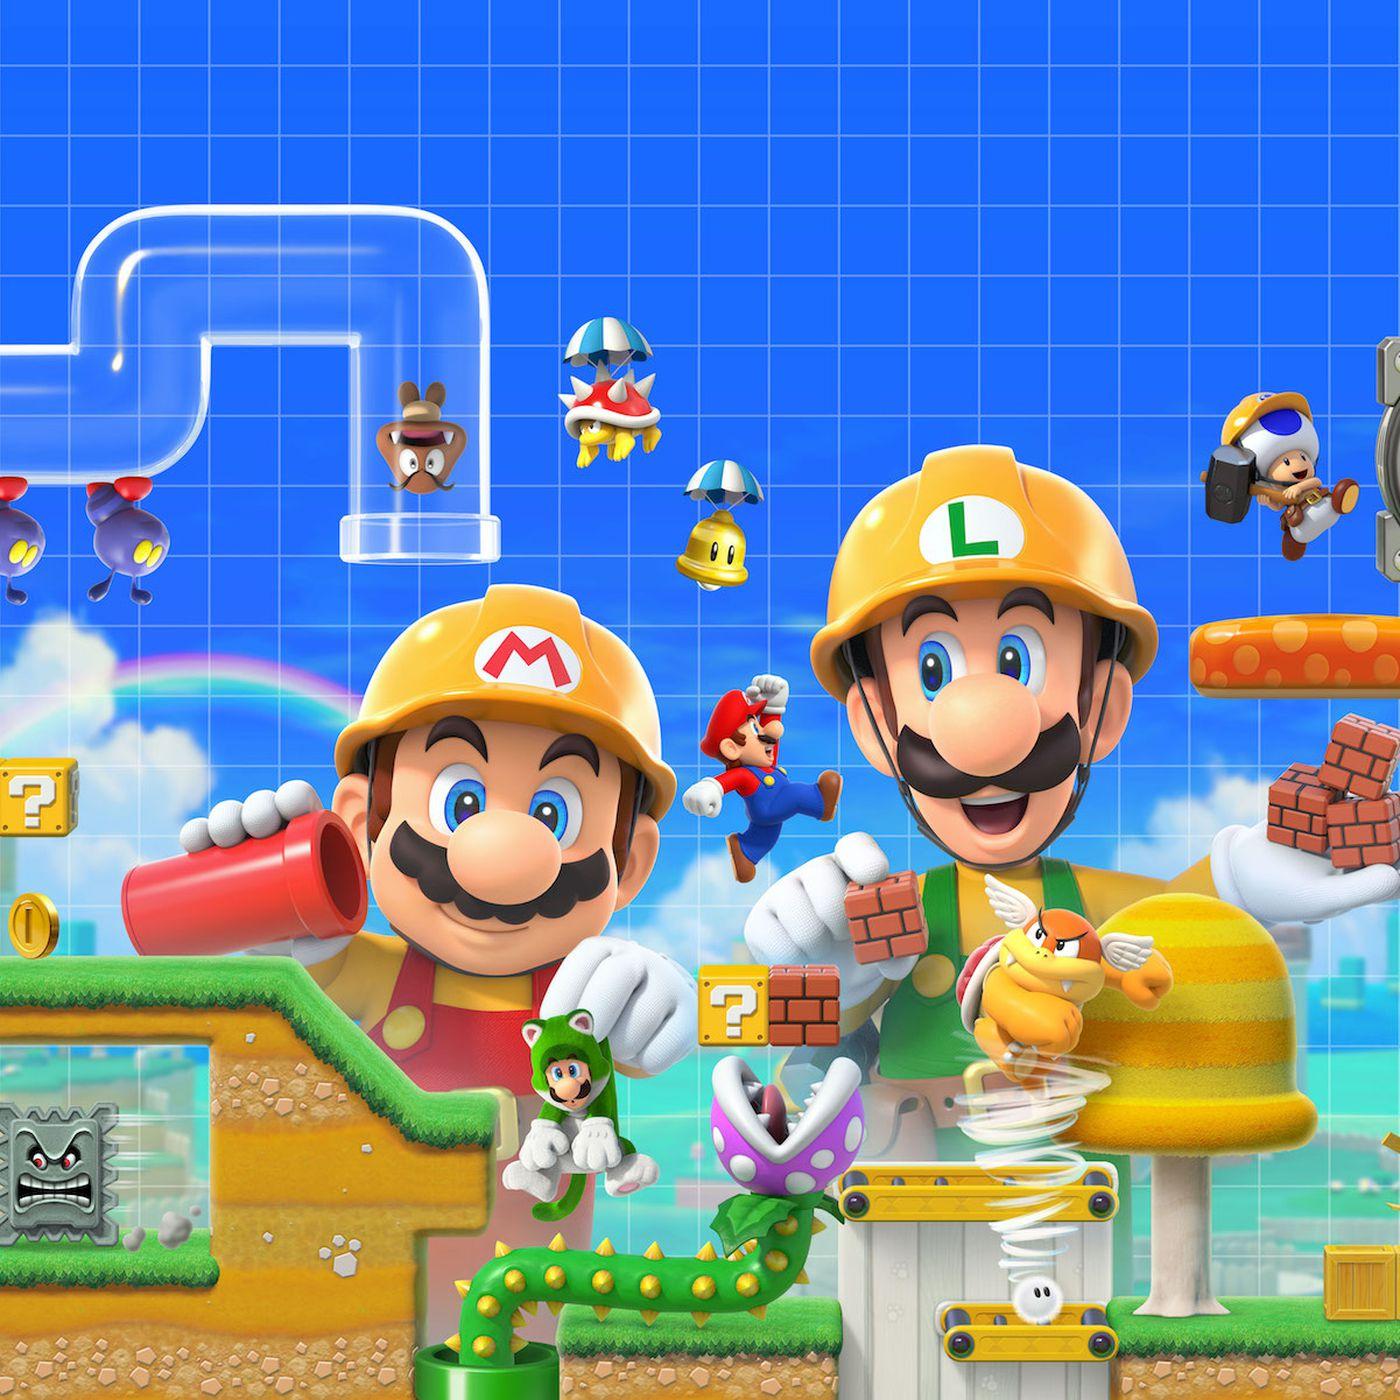 Super Mario Maker 2: New details revealed through poster